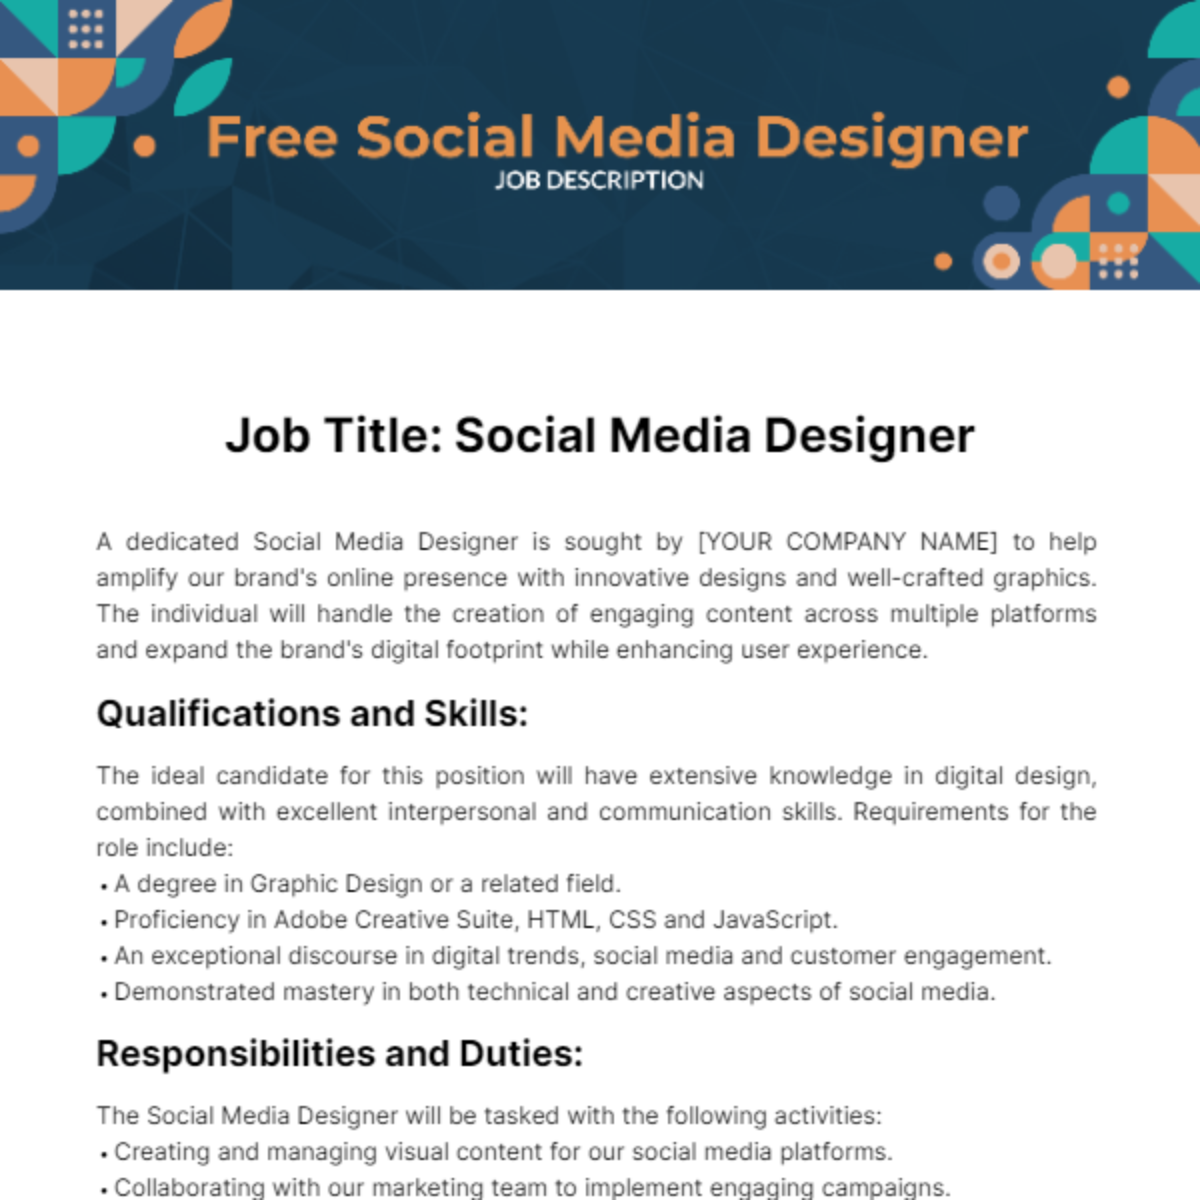 Free Social Media Designer Job Description Template